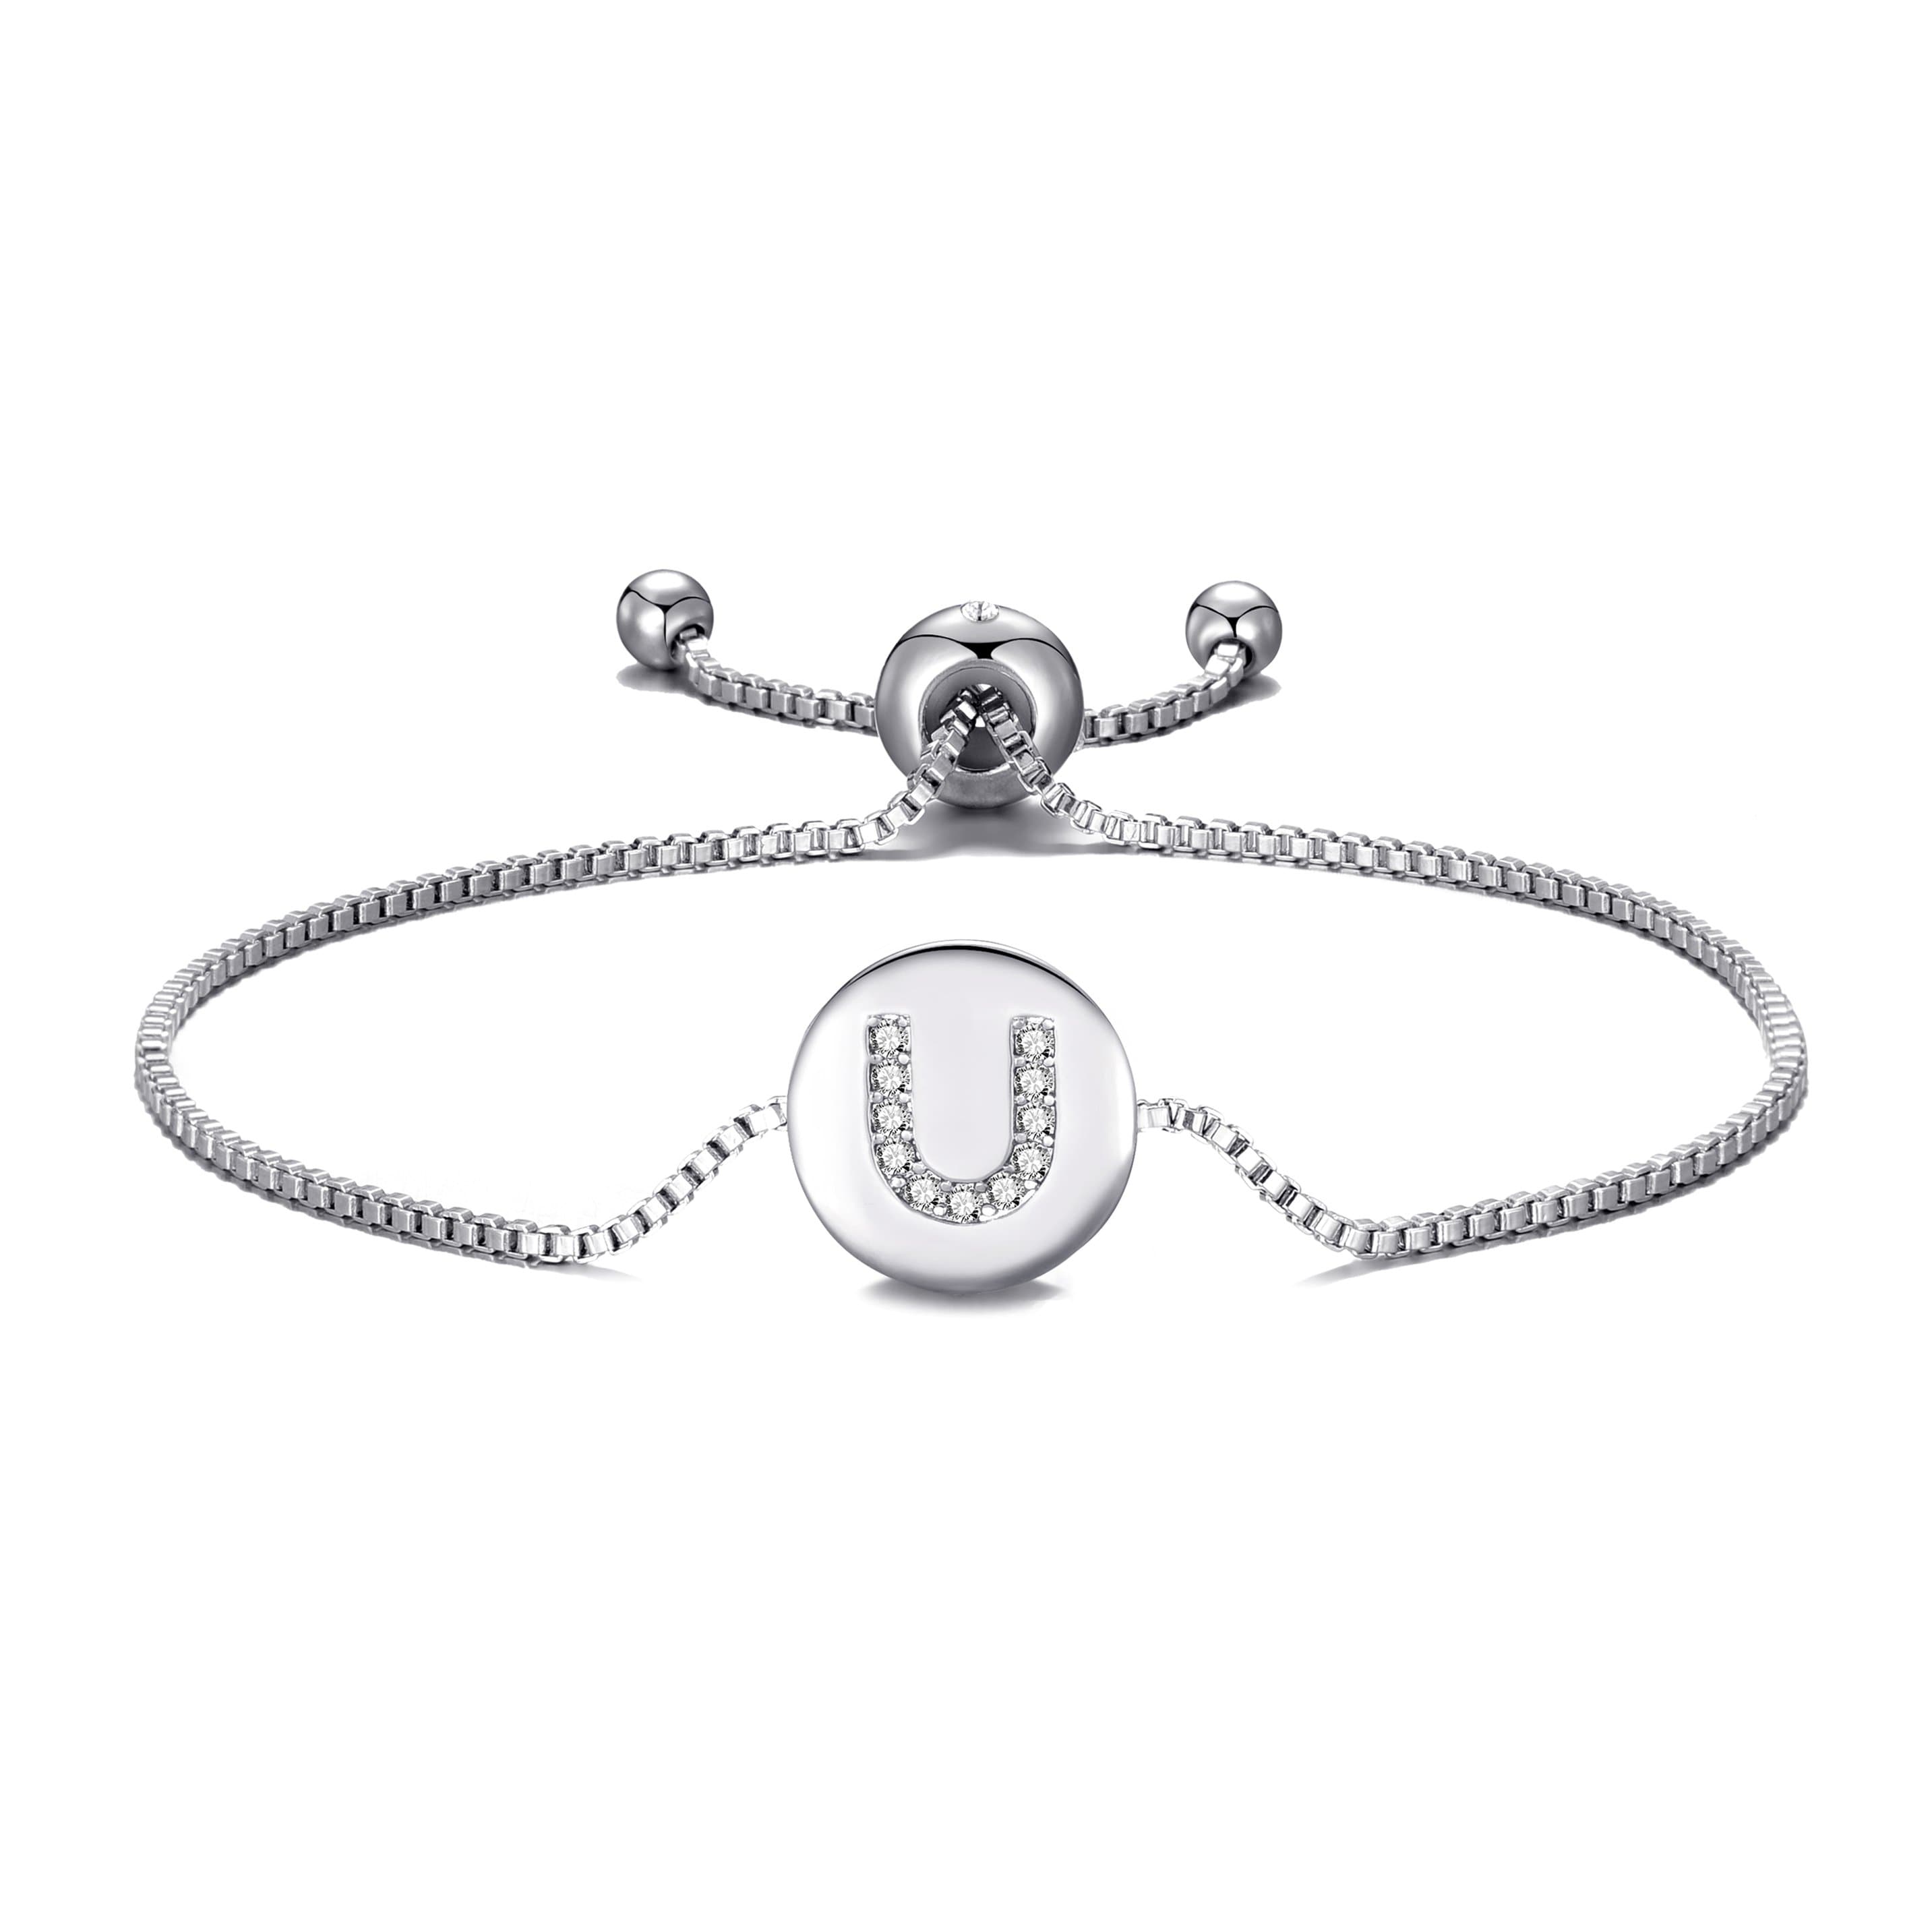 Initial Friendship Bracelet Letter U Created with Zircondia® Crystals by Philip Jones Jewellery